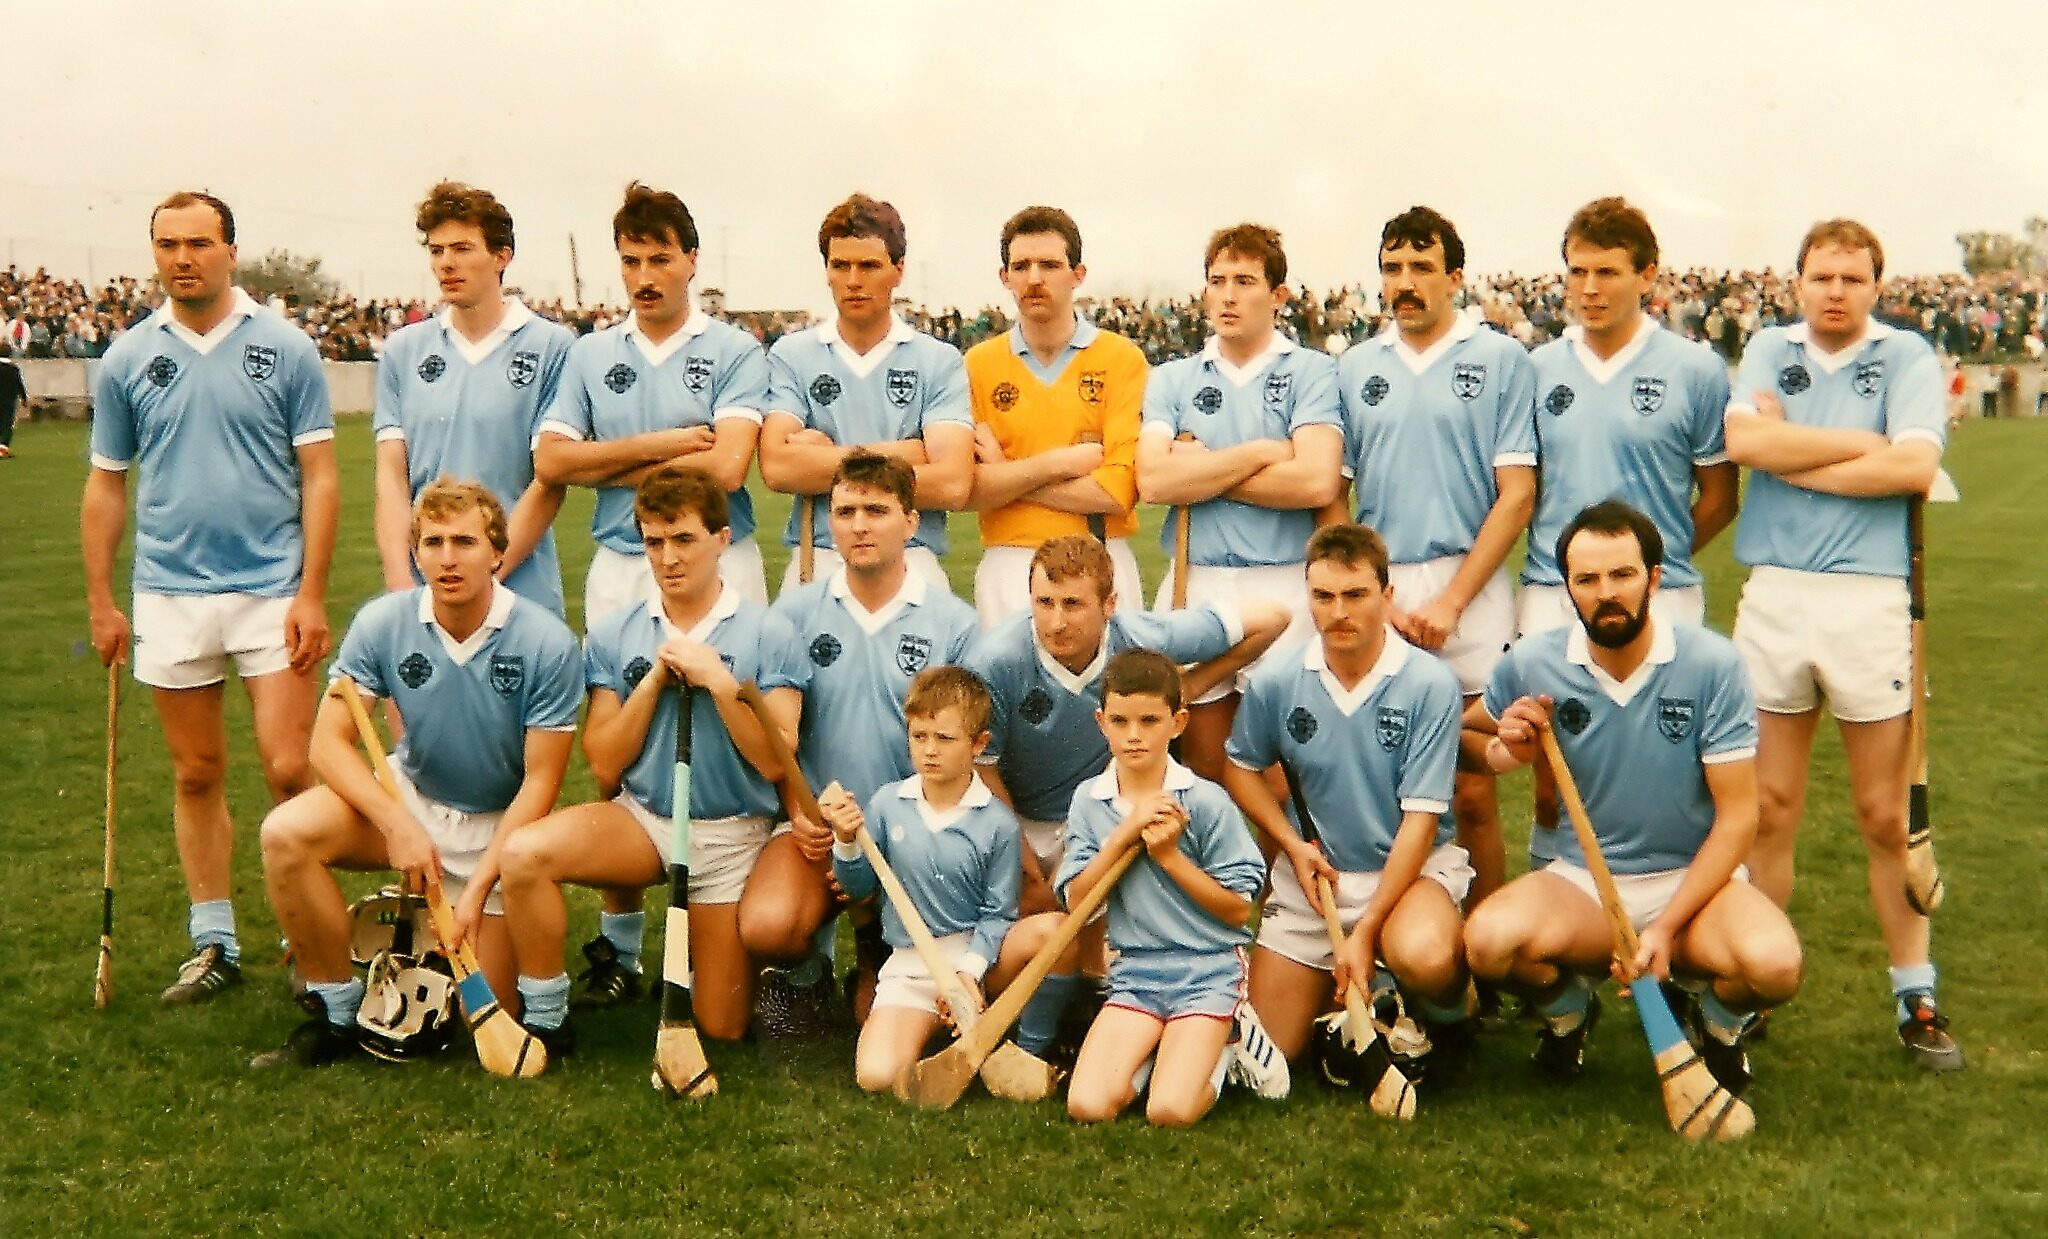 Roanmore, Waterford senior hurling champions 1989